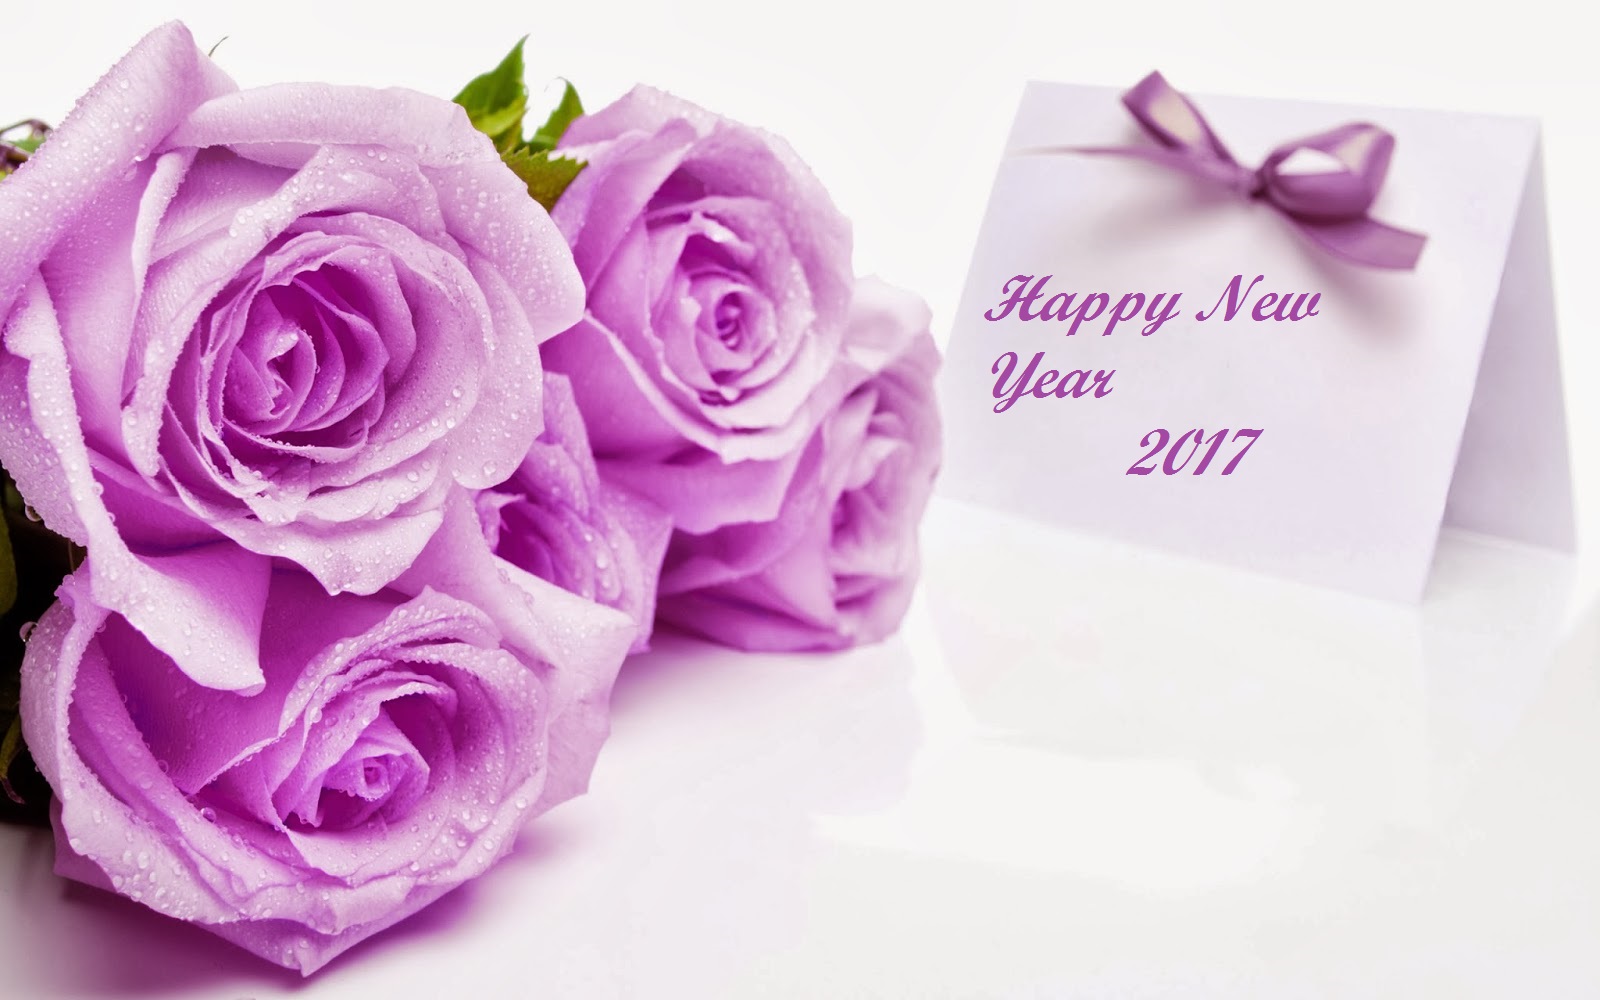 new year greetings card image 2017